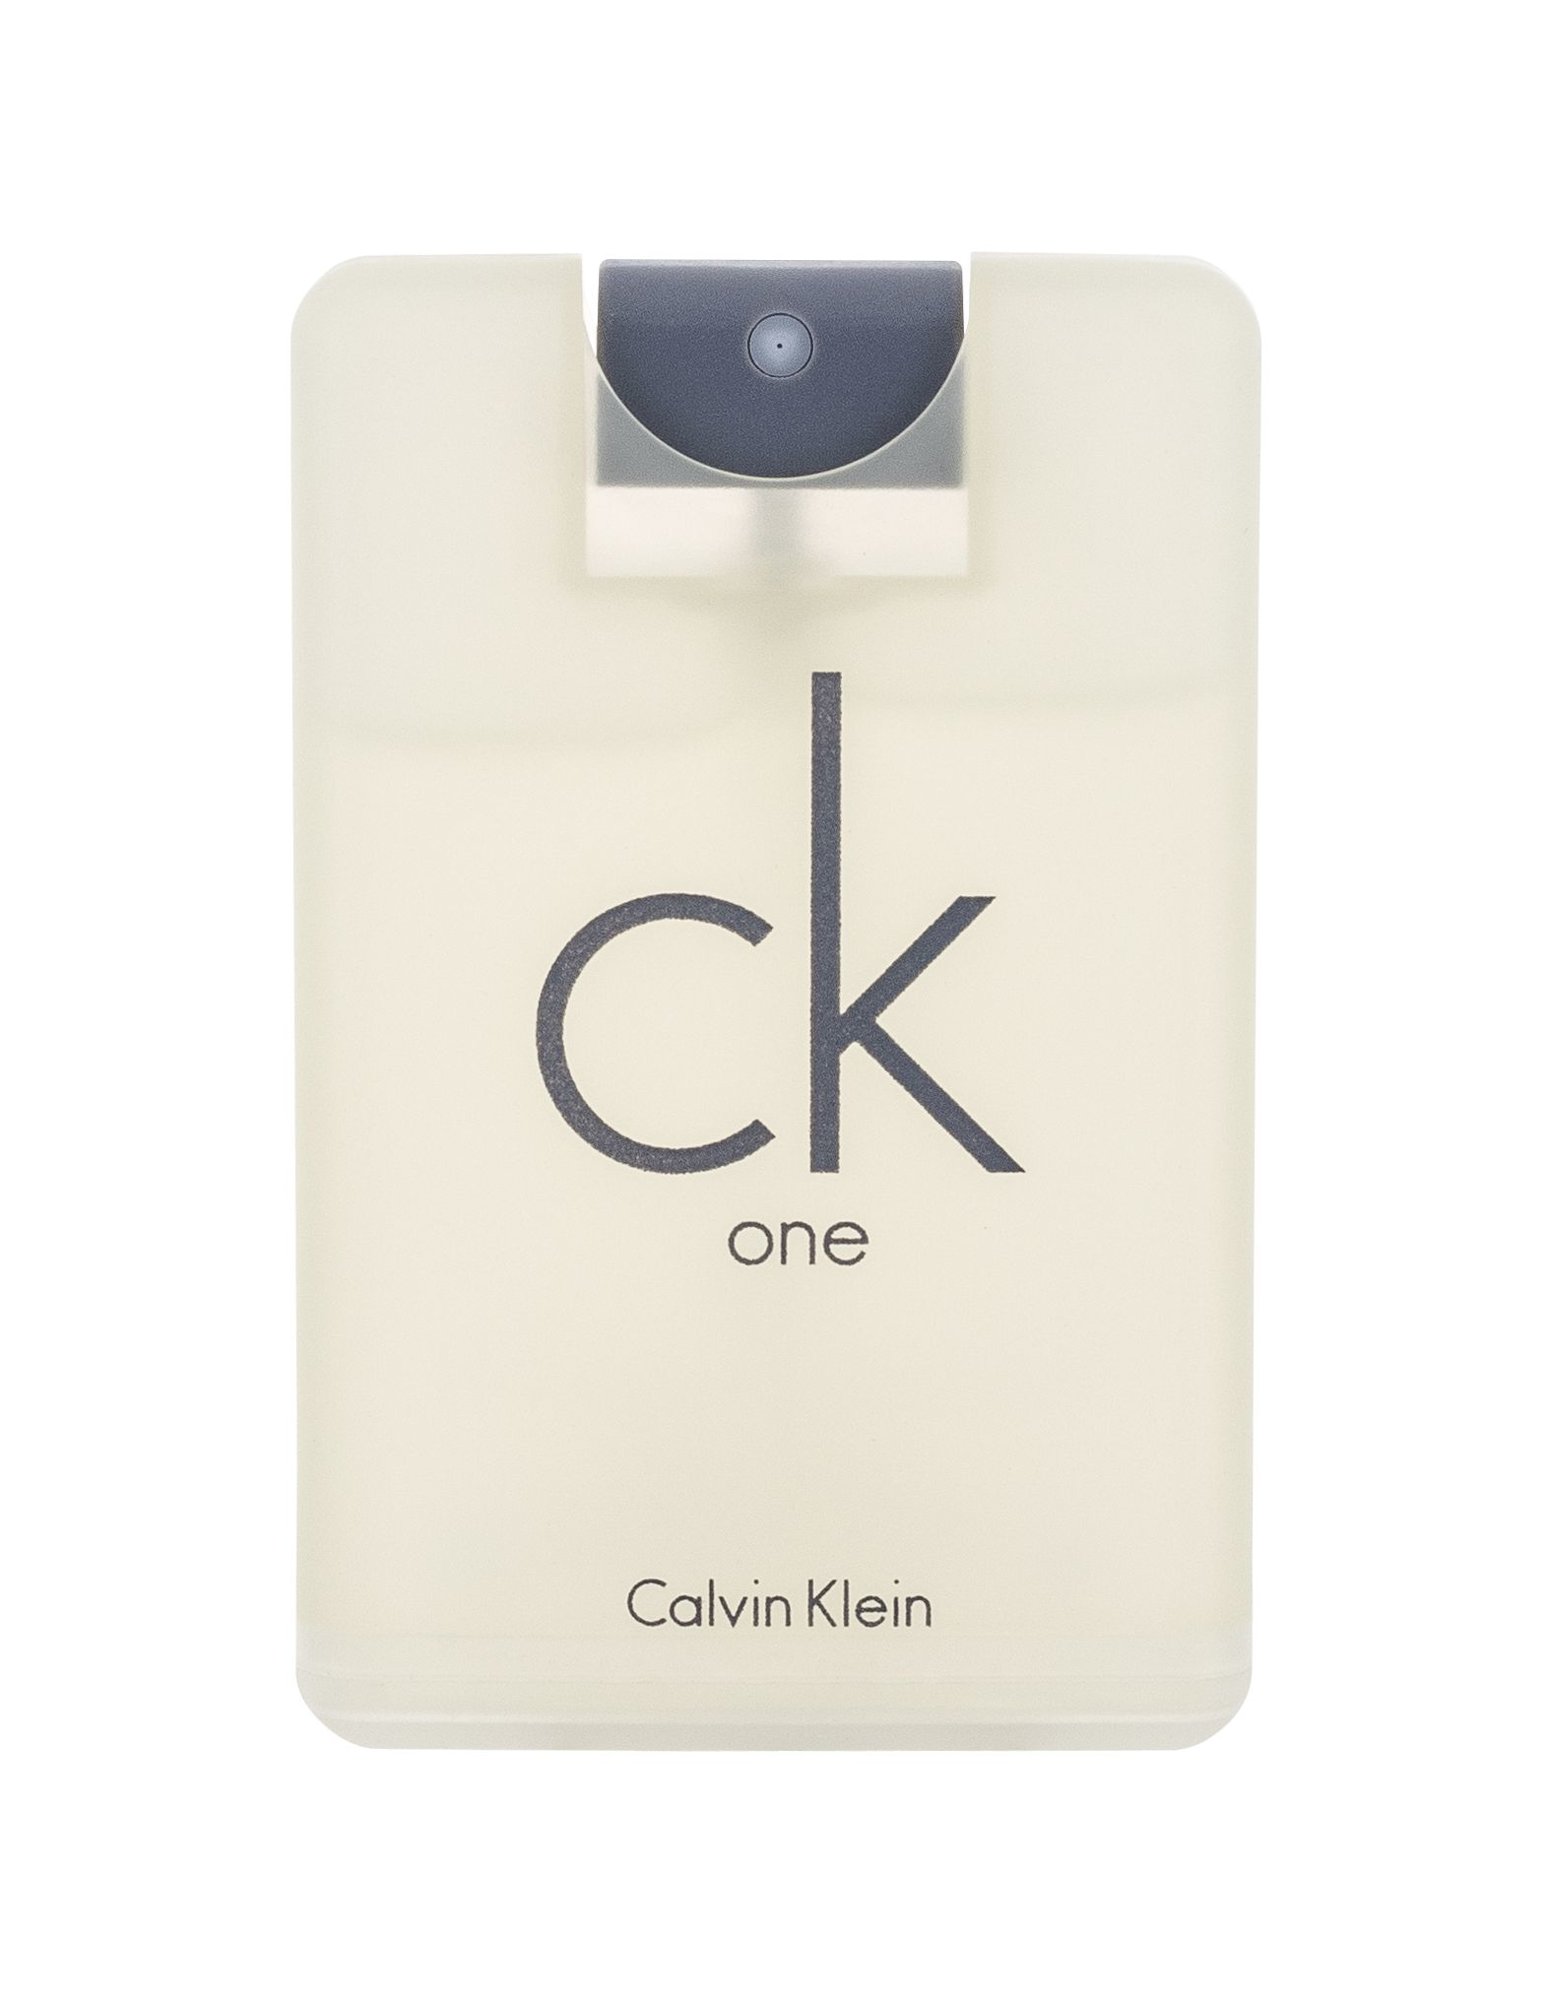 Calvin Klein CK One, Toaletní voda 10ml